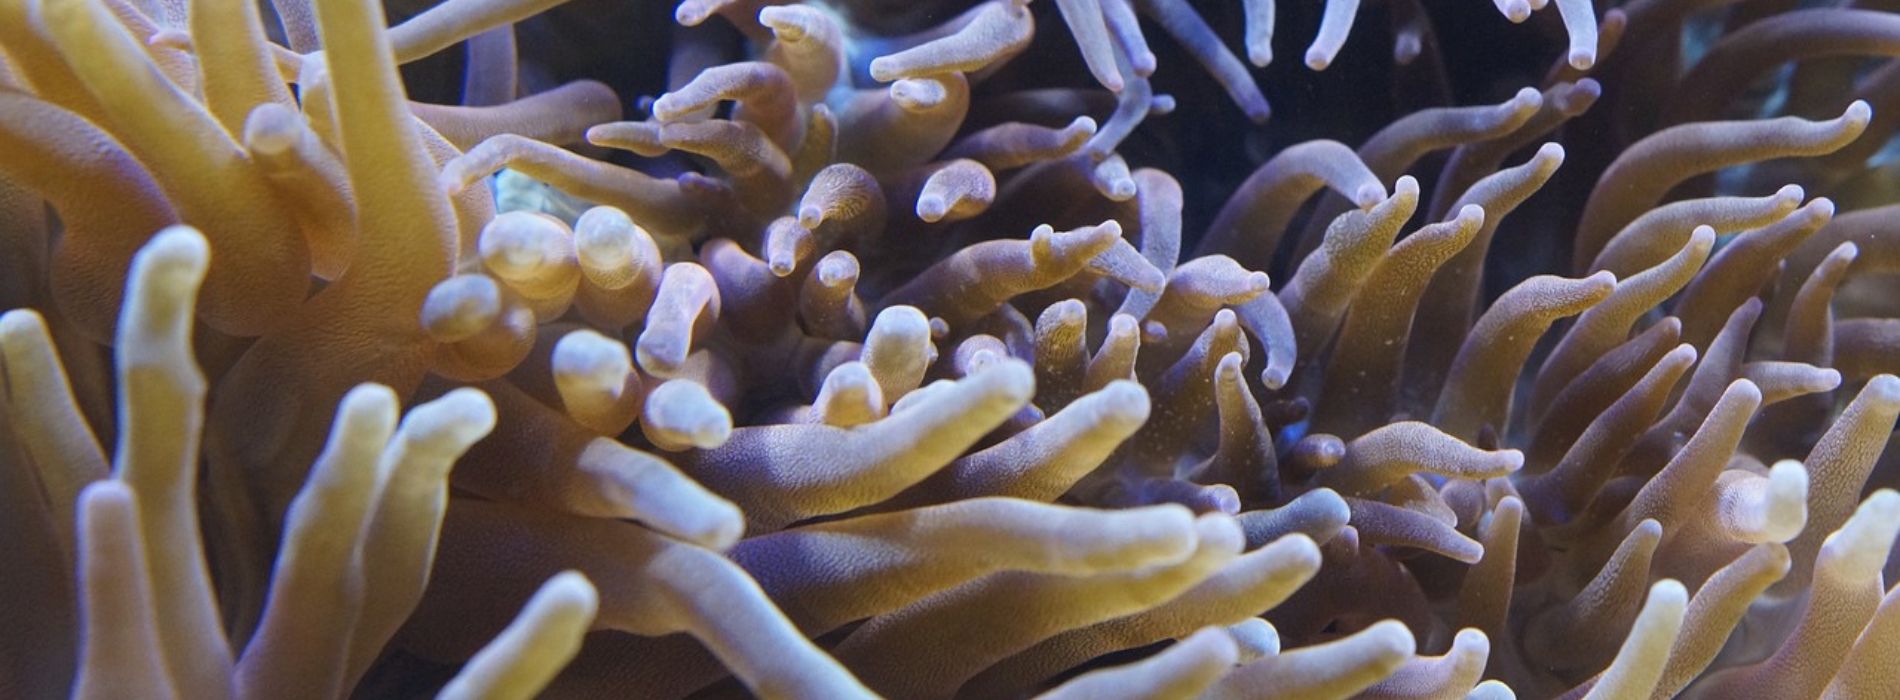 sea-anemones-biography